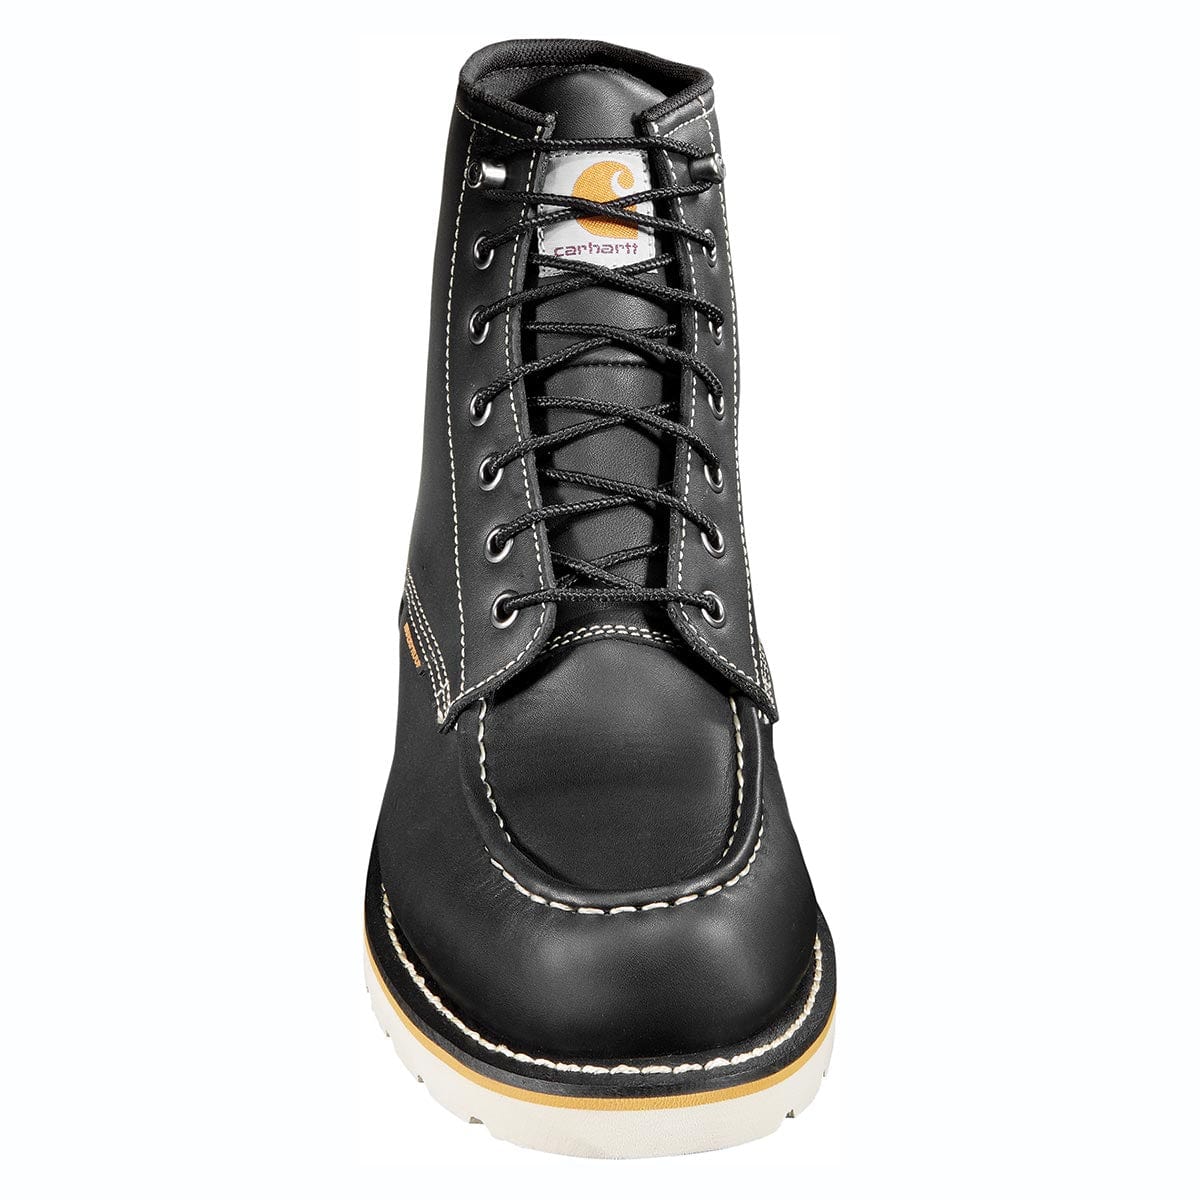 Carhartt Men's 6" Plain Toe Wedge Boot